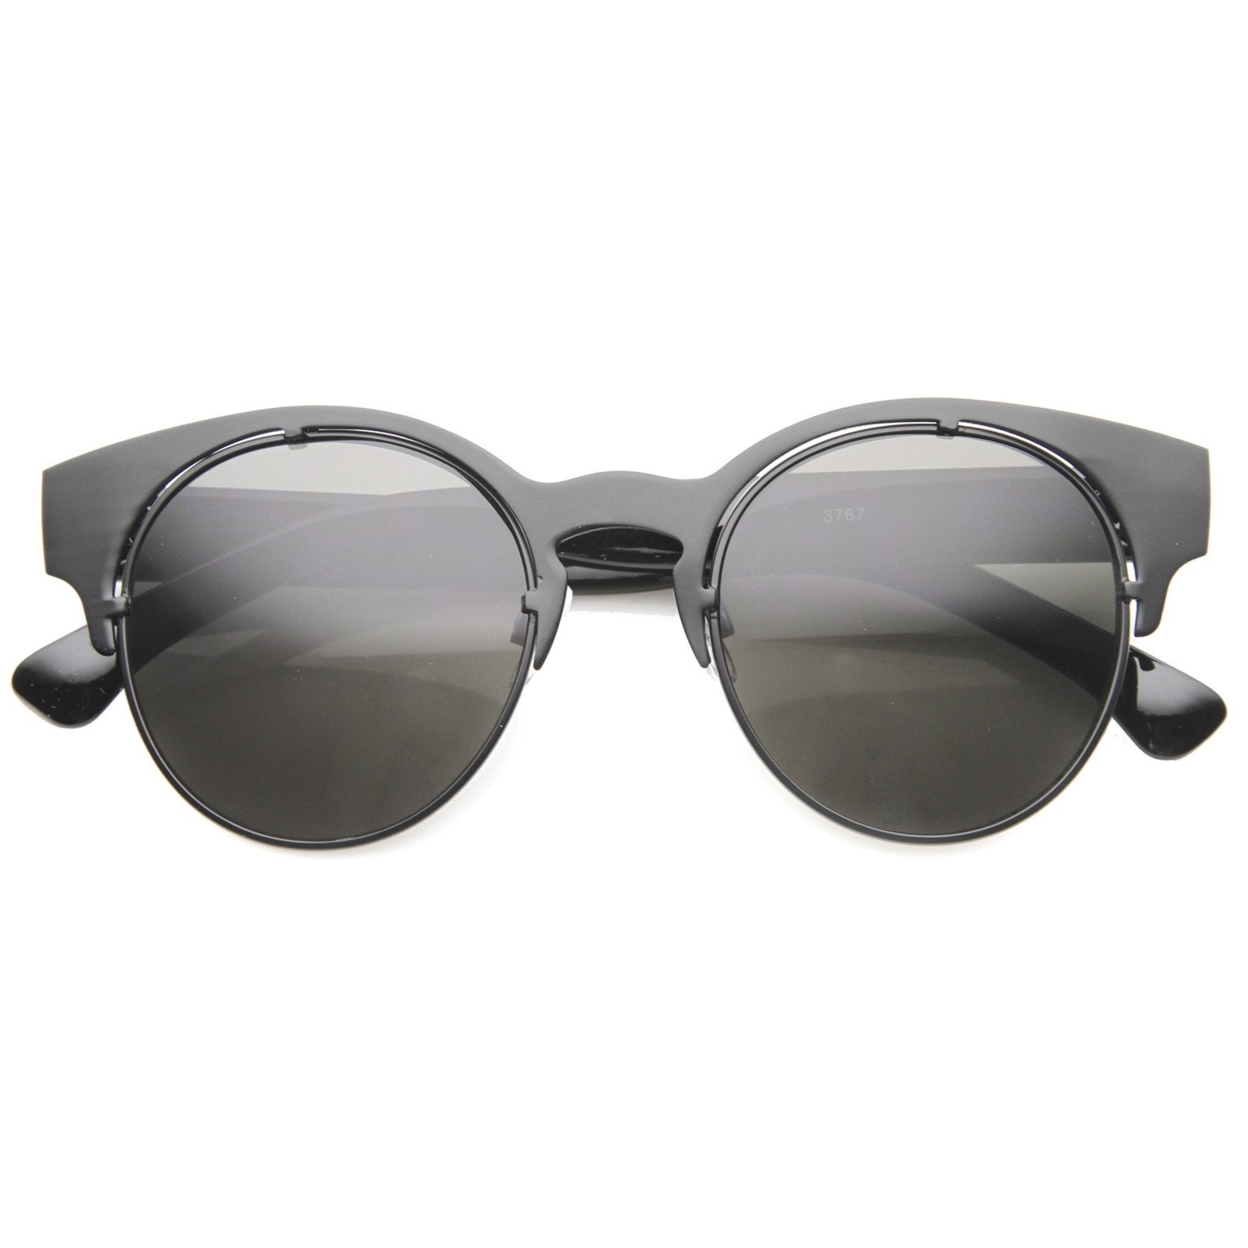 Mens Metal Semi-Rimless Sunglasses With UV400 Protected Composite Lens - Silver-Black / Smoke